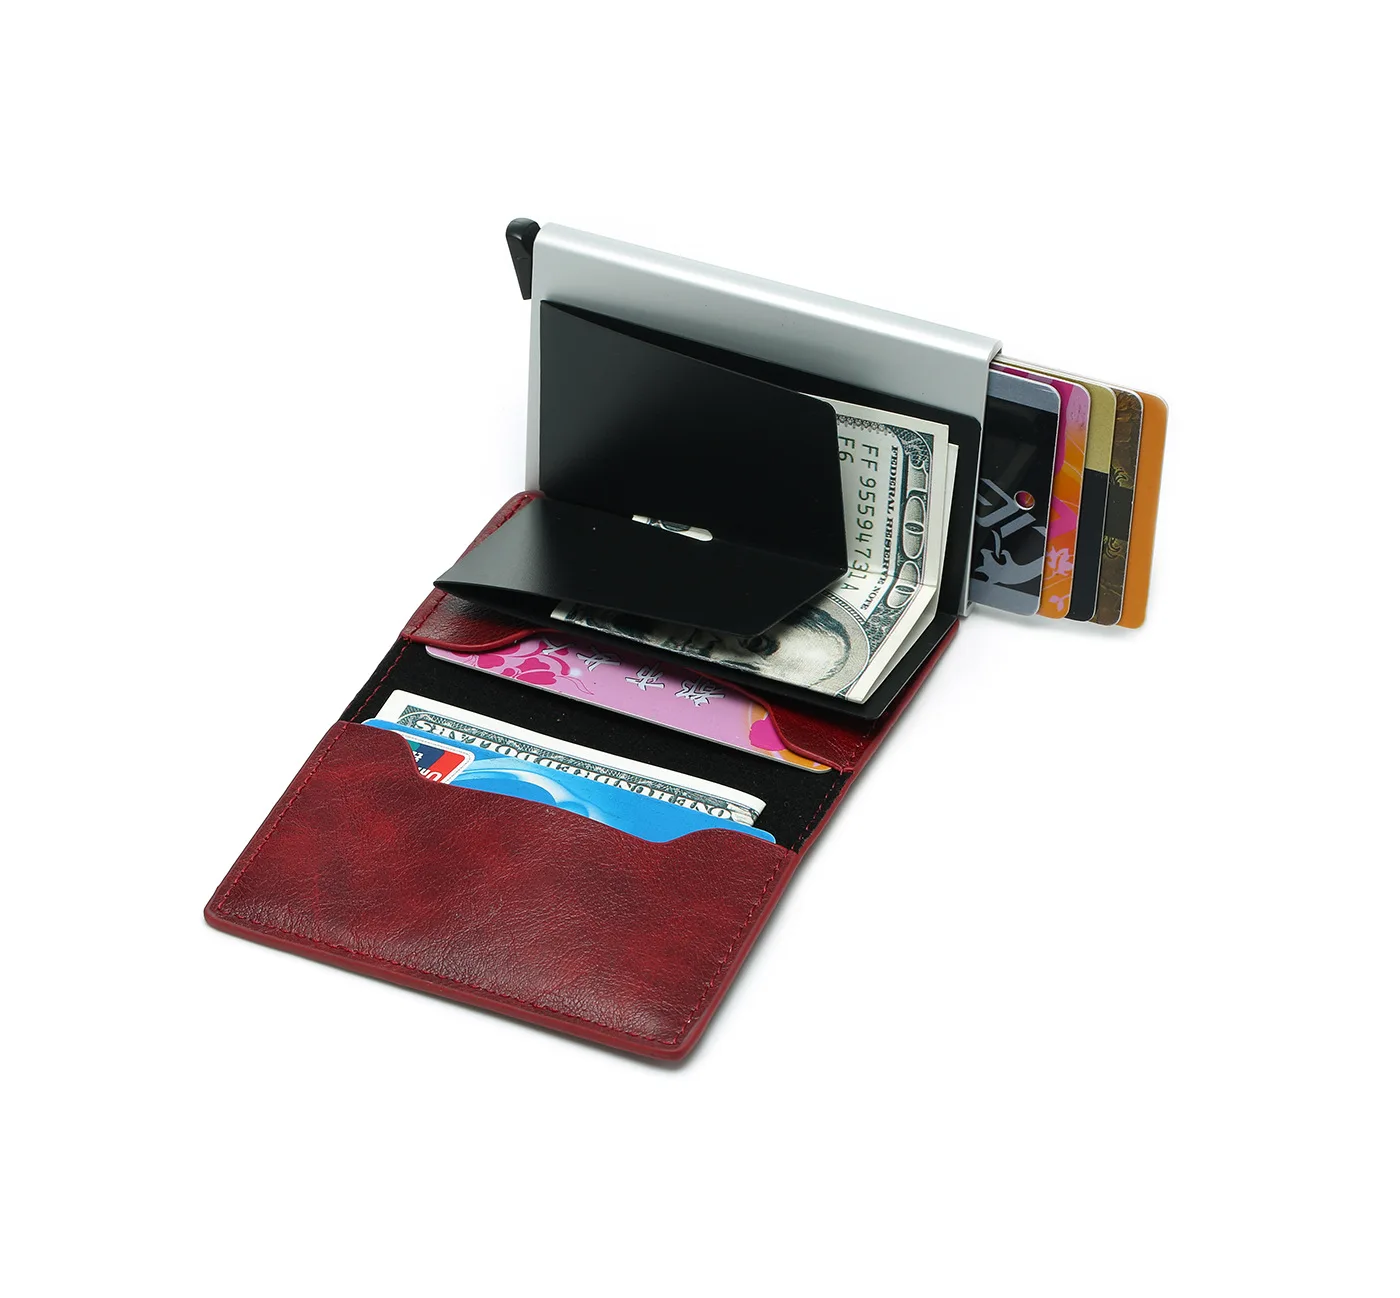 ZOVYZOL Slim Mini Wallet Metal Aluminum Business id Card Case Anti Rfid Protection Men Women Credit Card Holder Leather Vintage